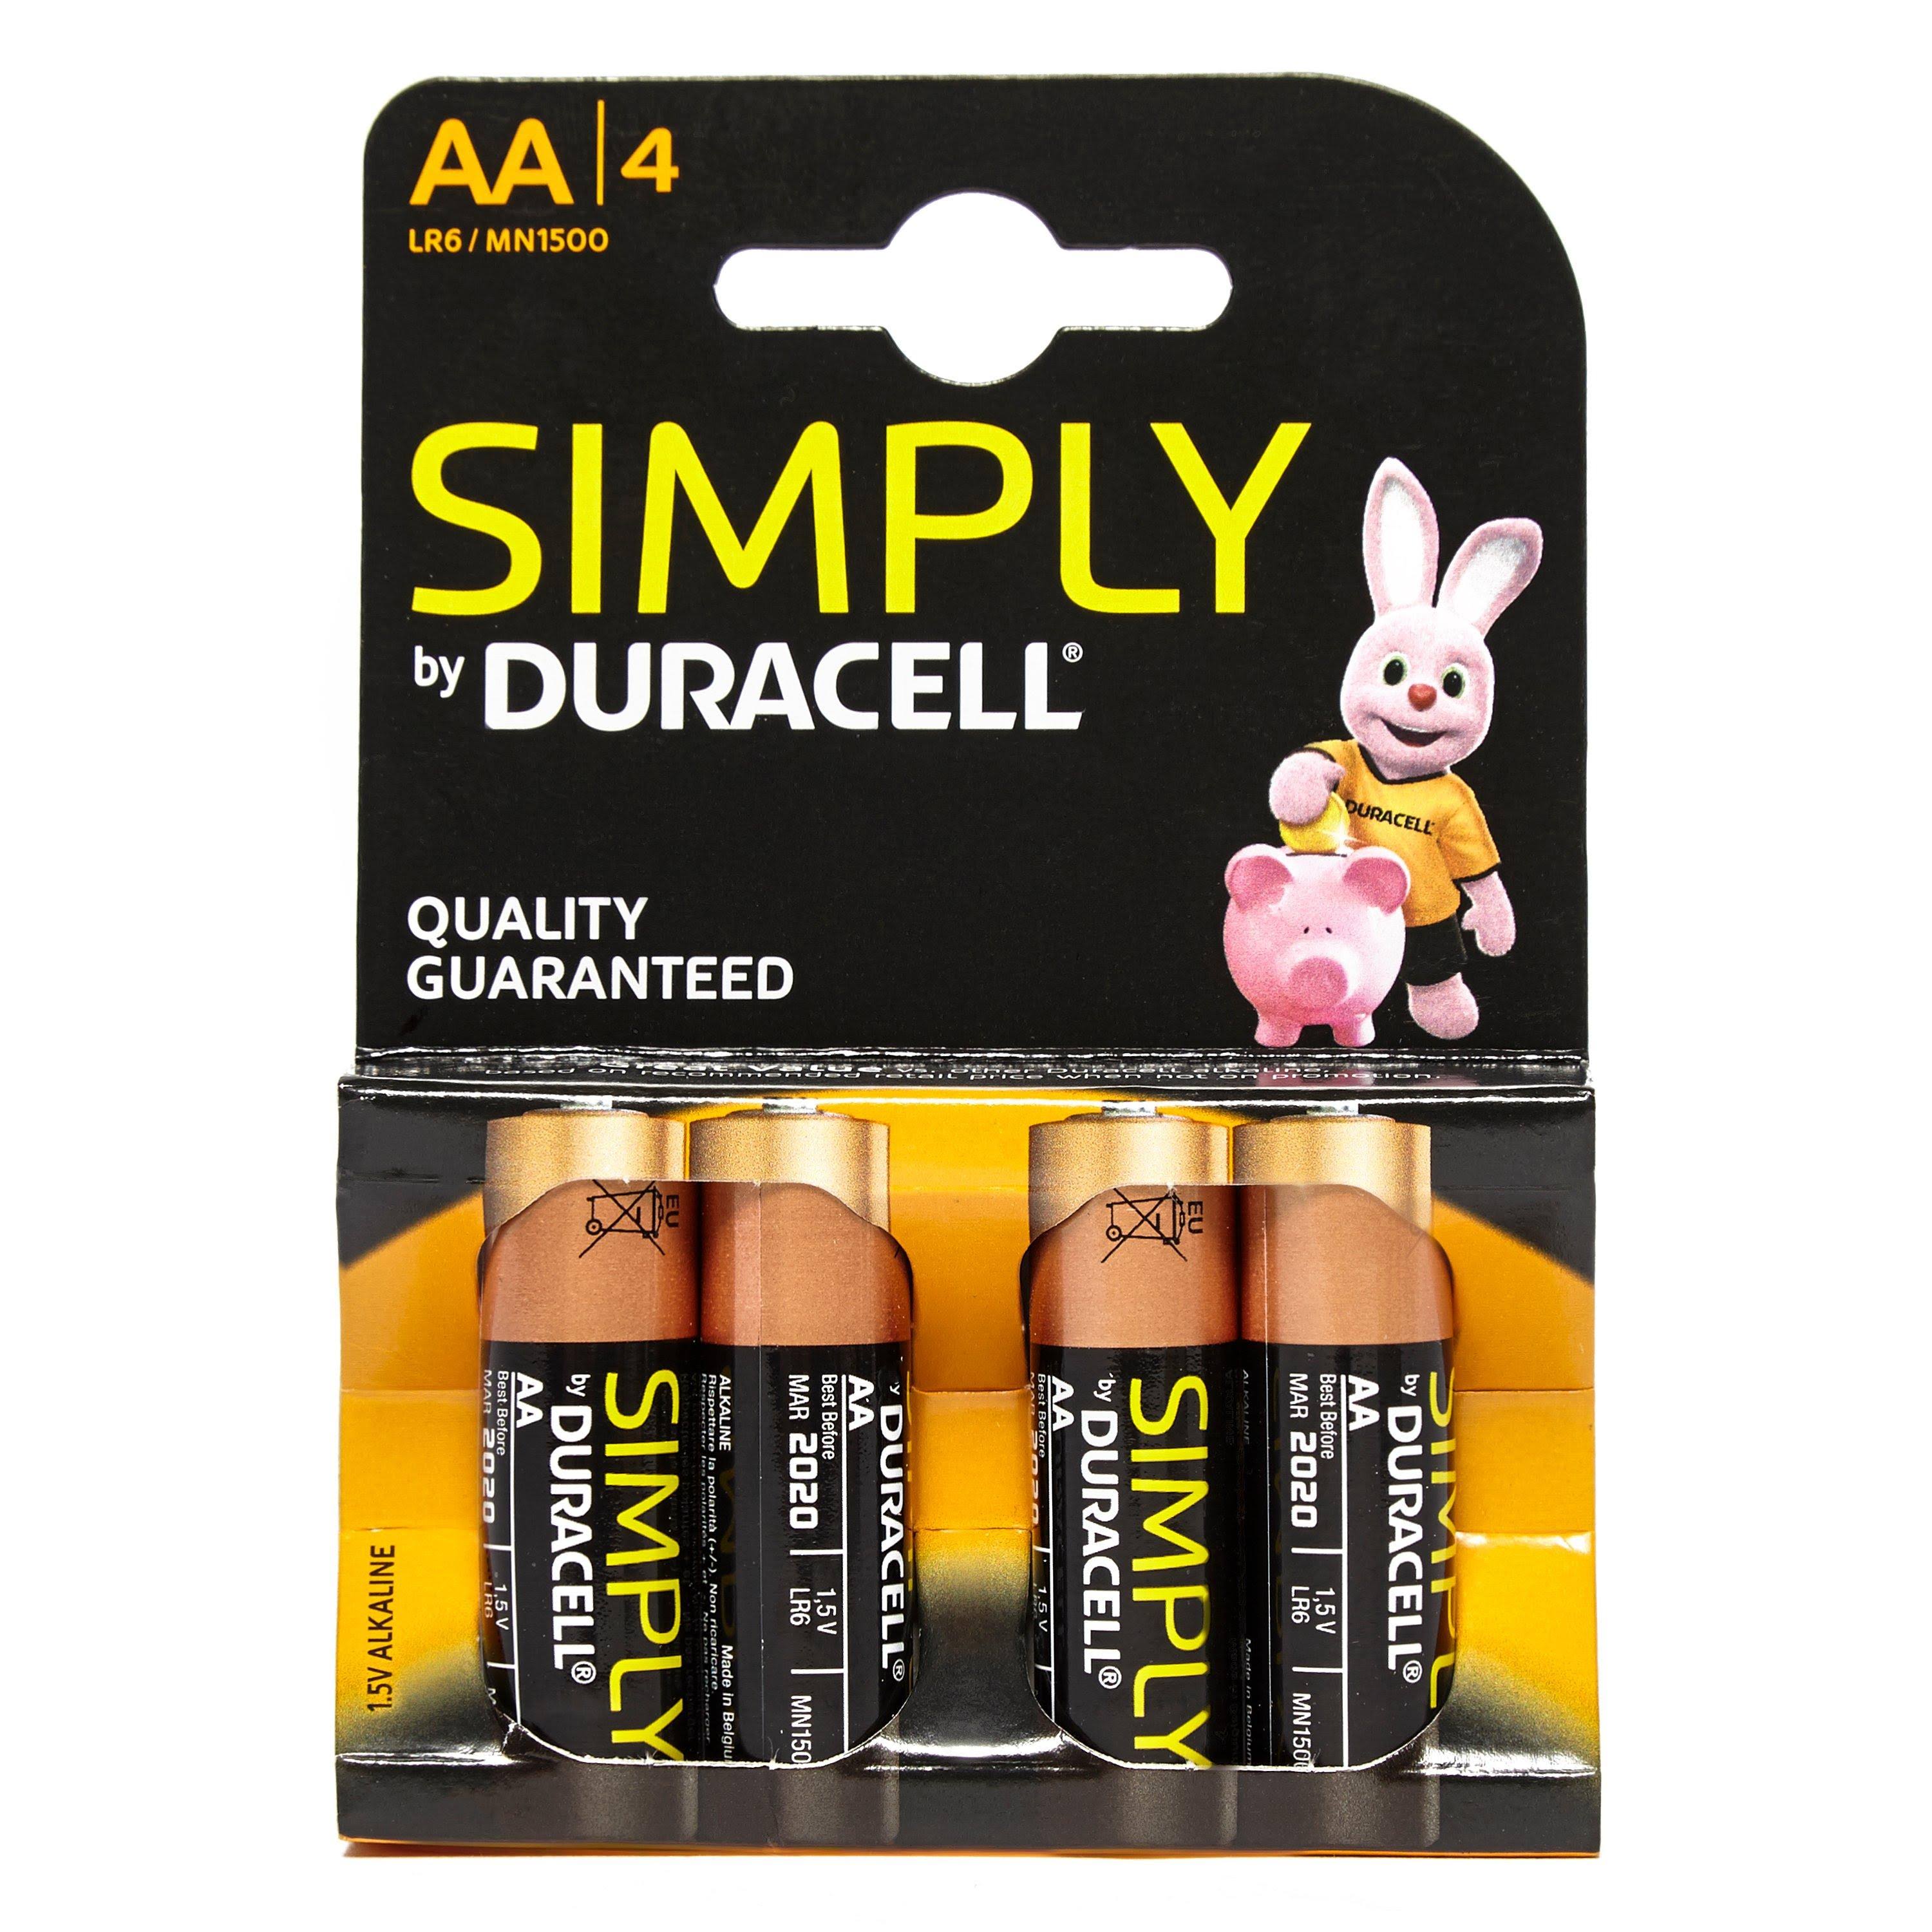 Duracell Simply AA Alkaline Batteries - 4pk